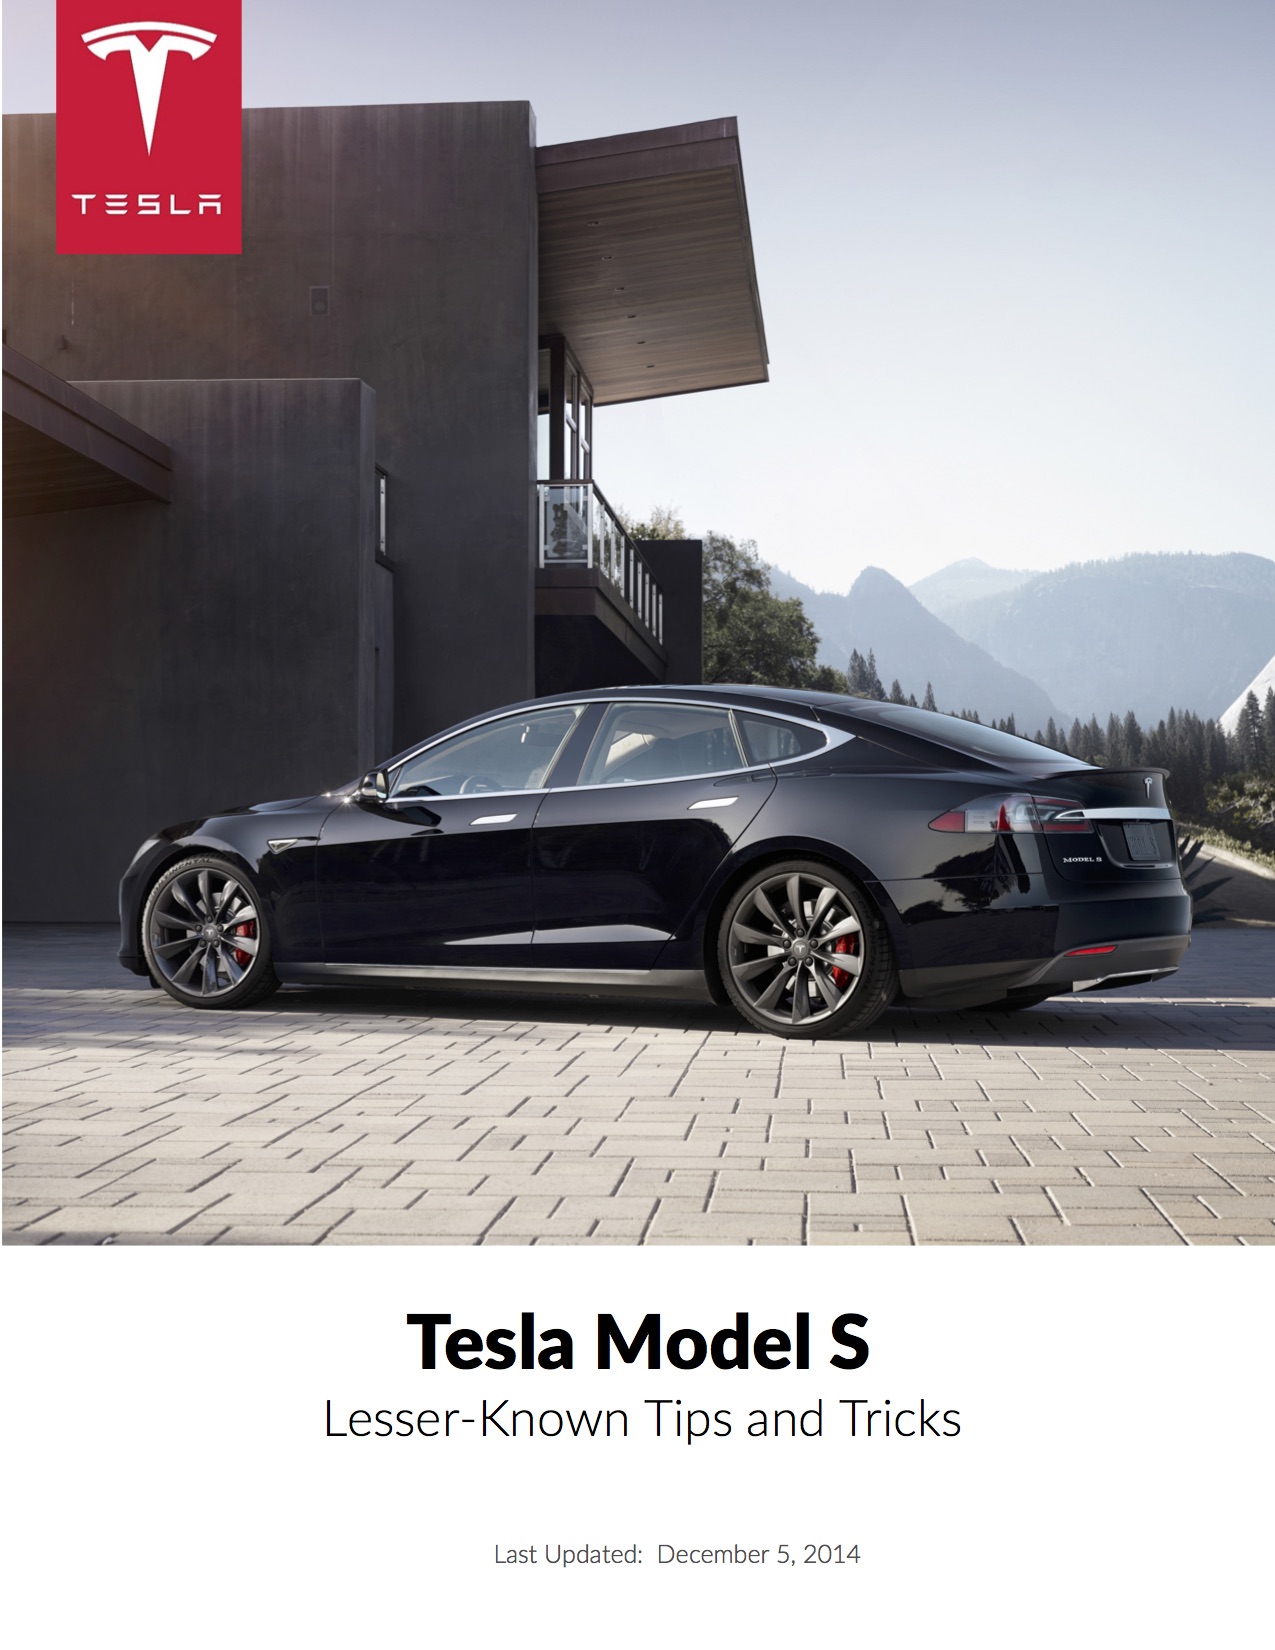 Tesla Model S Tips and Tricks Cover.jpg